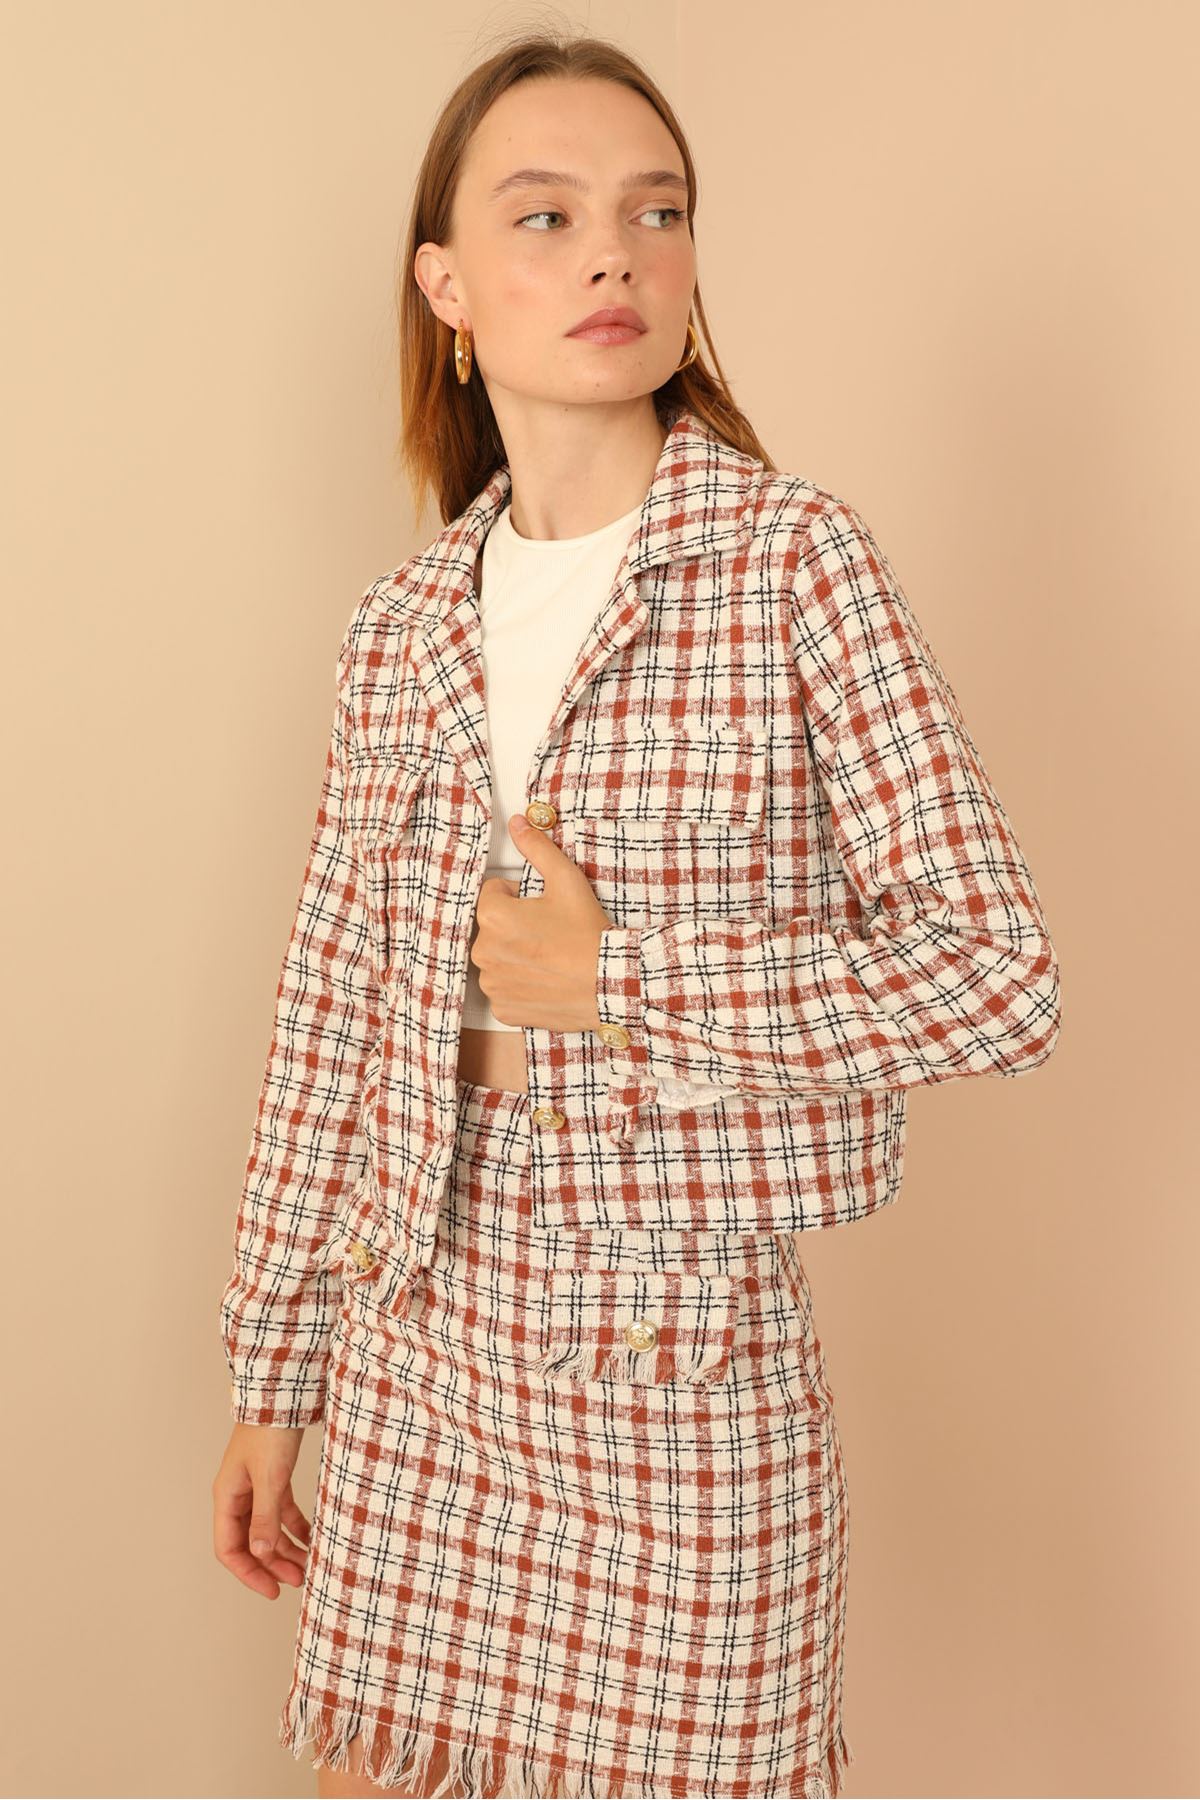 Channel Woven Fabrics Long Sleeve Plaid Button Women Jacket - Light Brown